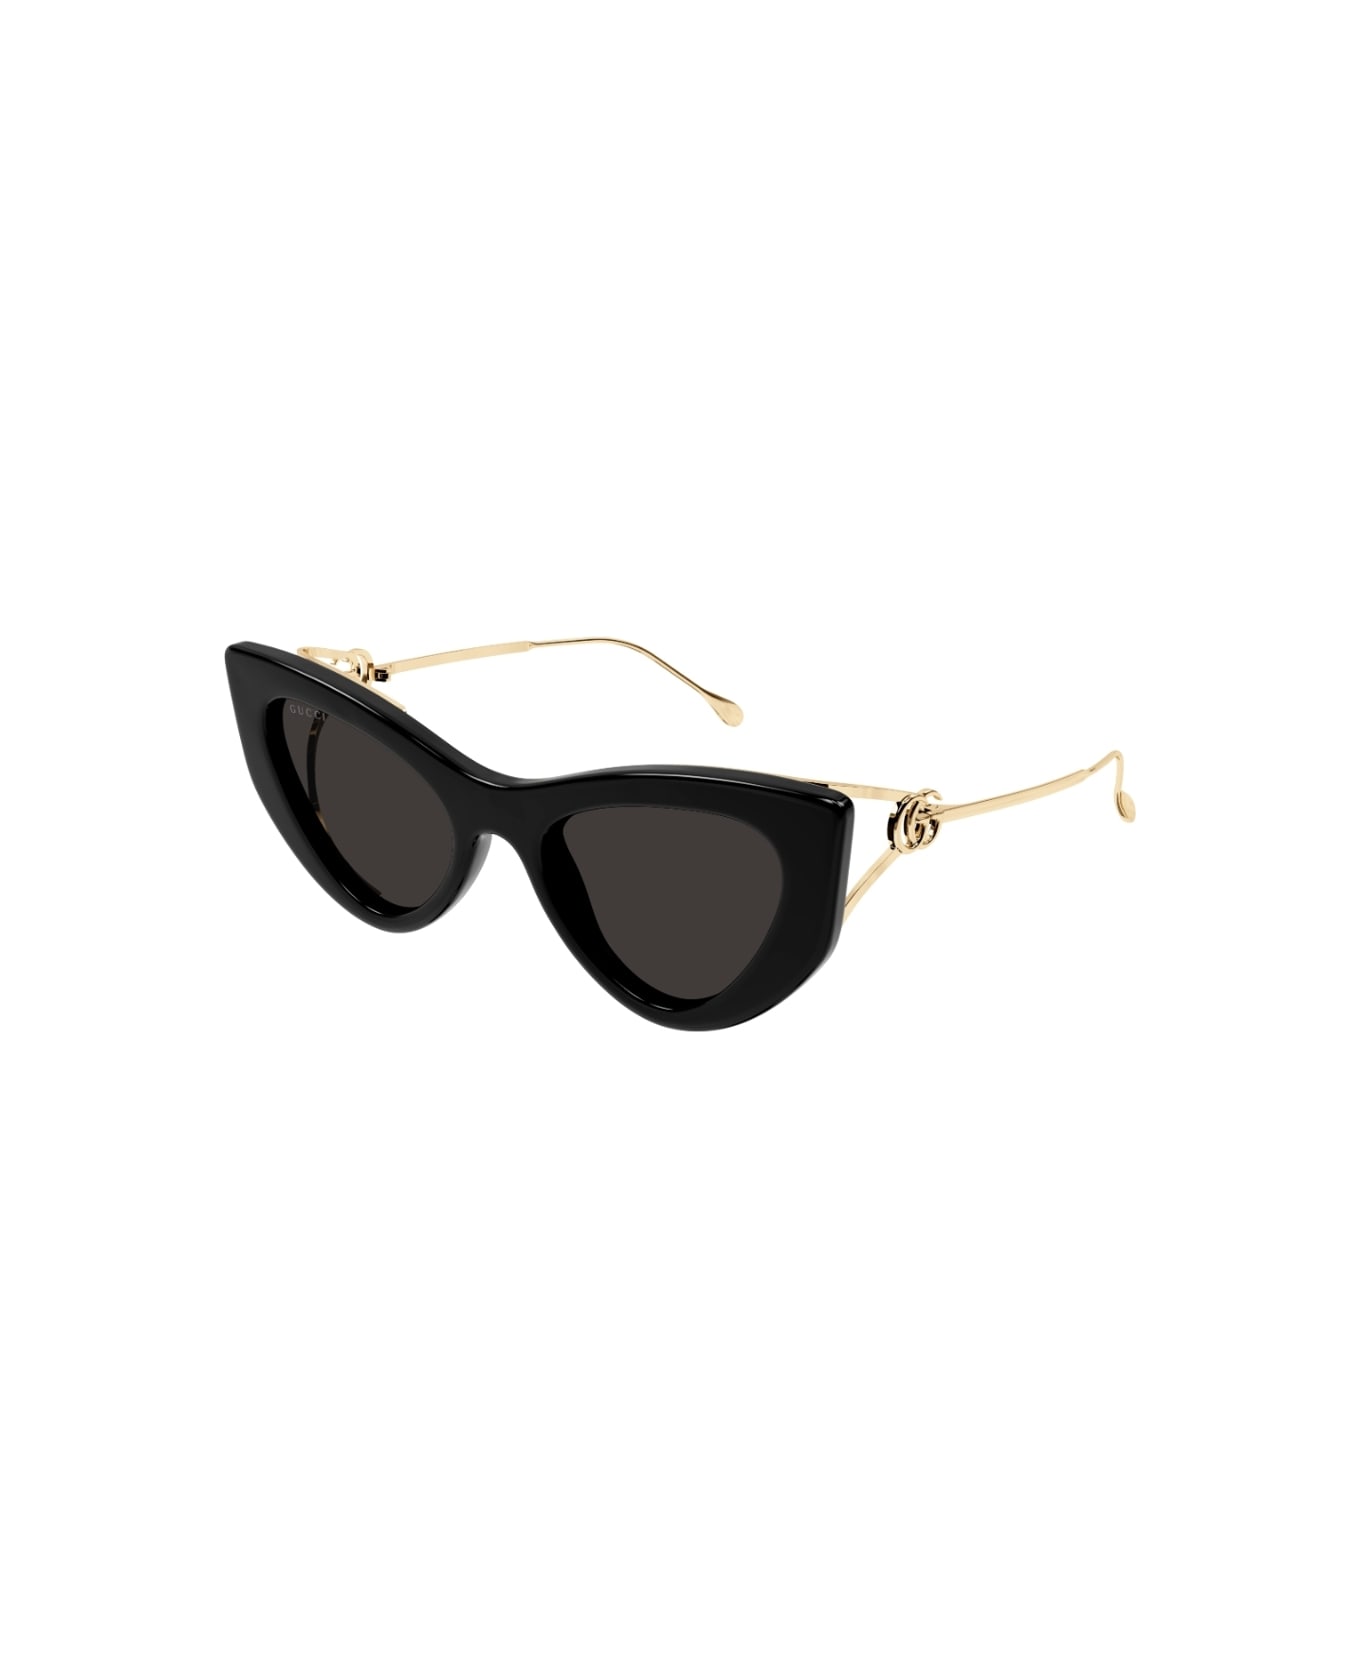 Gucci Eyewear GG1565S 001 Sunglasses - Nero e oro サングラス